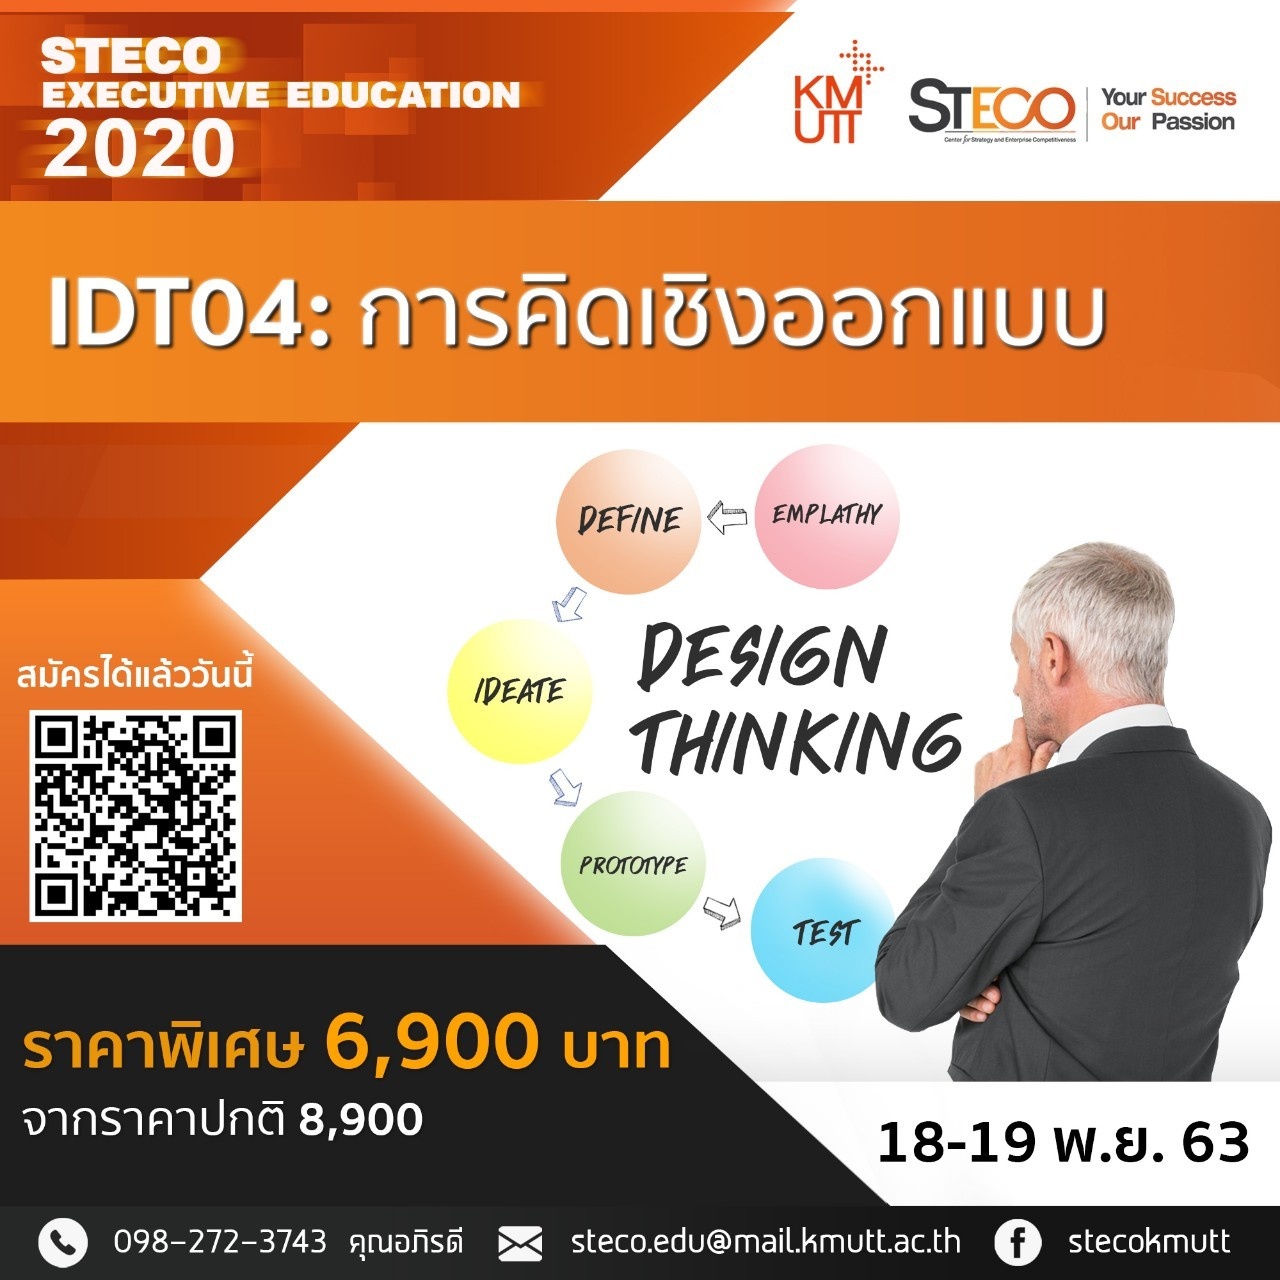 IDT04: Design Thinking (การคิดเชิงออกแบบ)